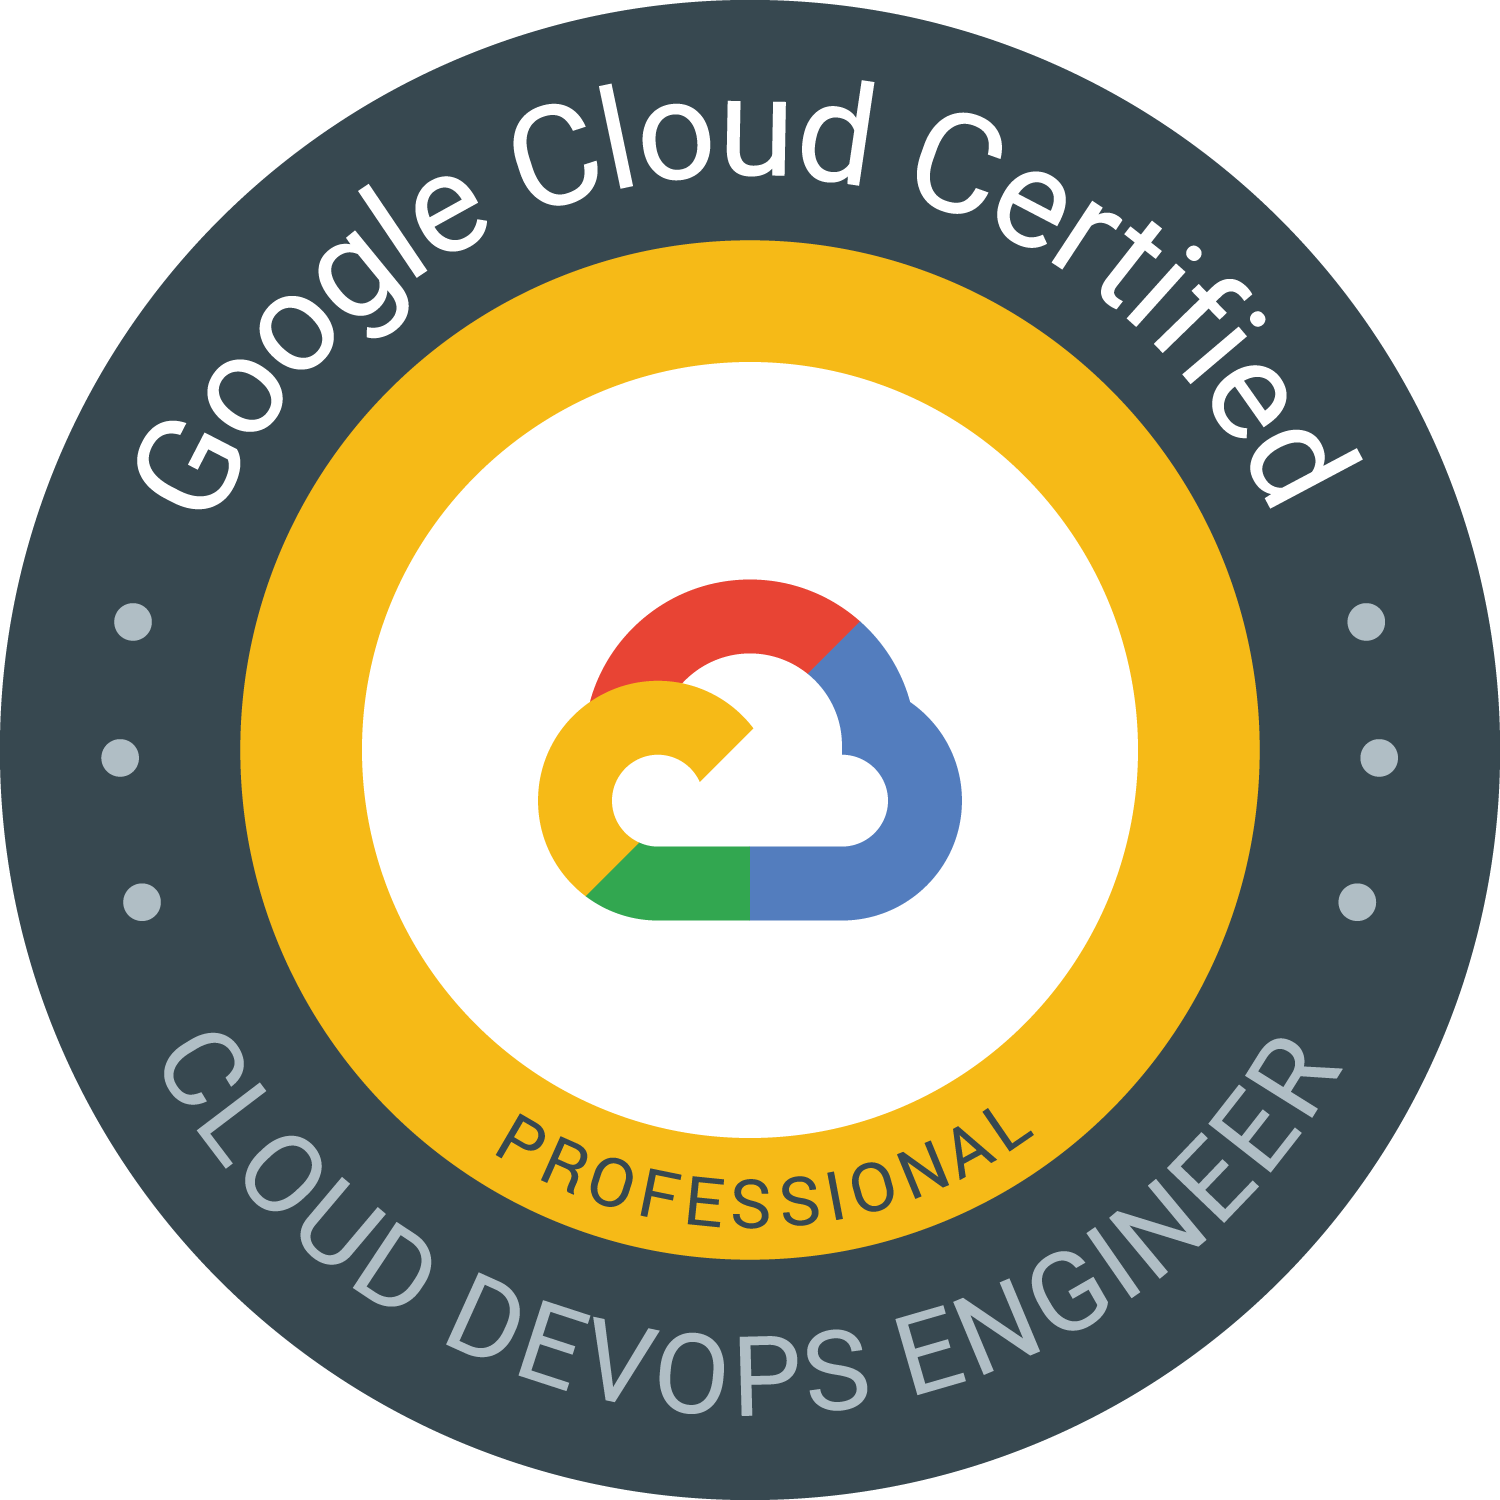 Google Cloud Certified Professional DevOps Engineer